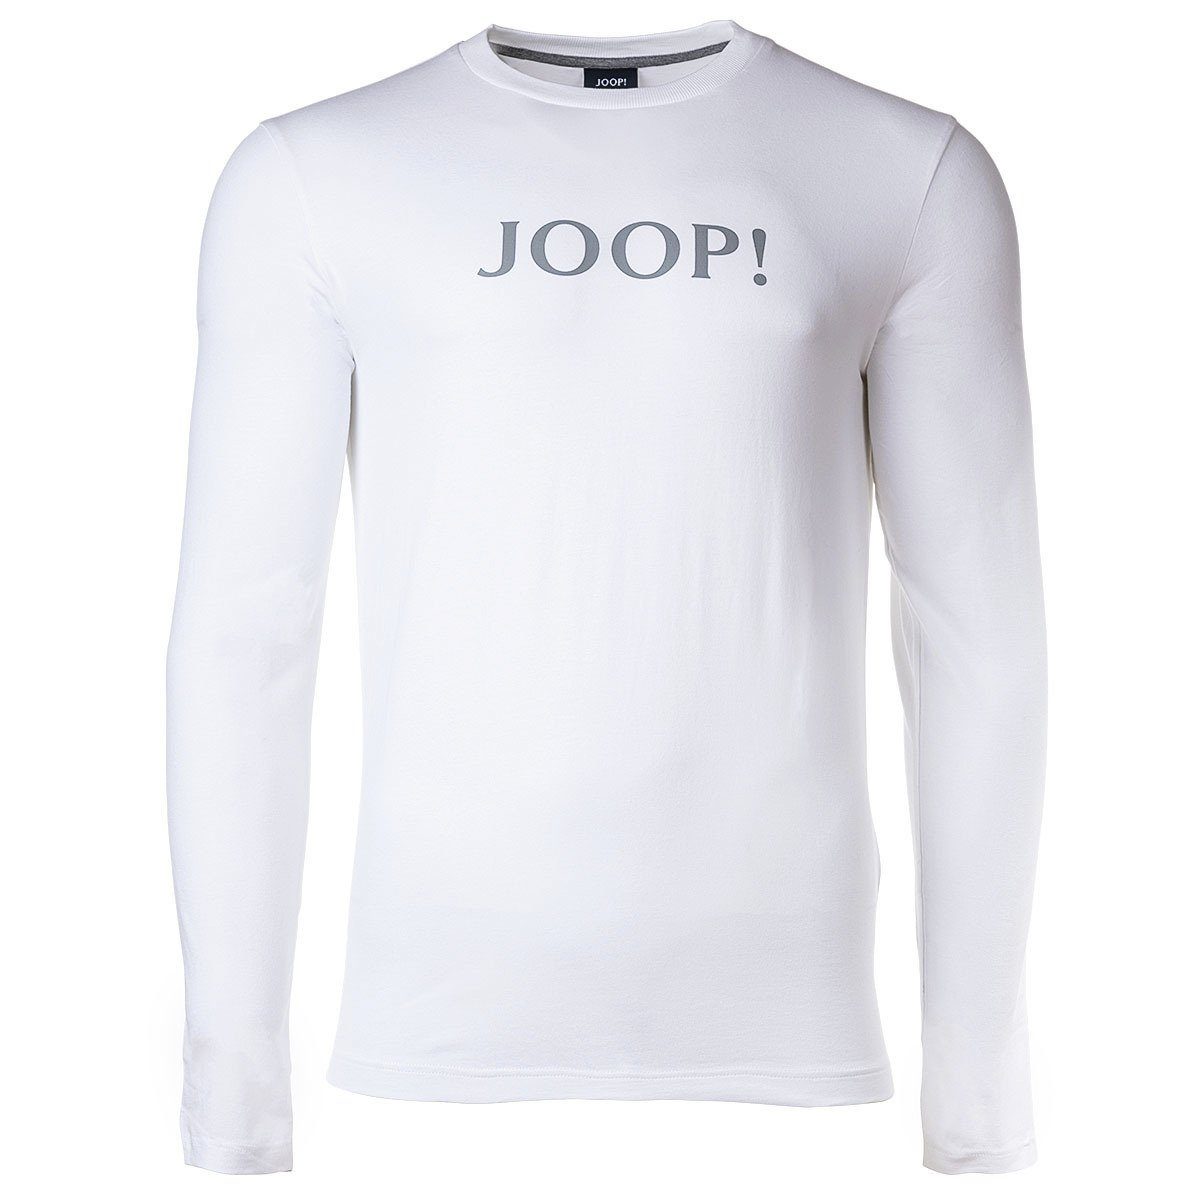 Joop! T-Shirt Herren Langarm-Shirt - Loungewear, Rundhals Weiß